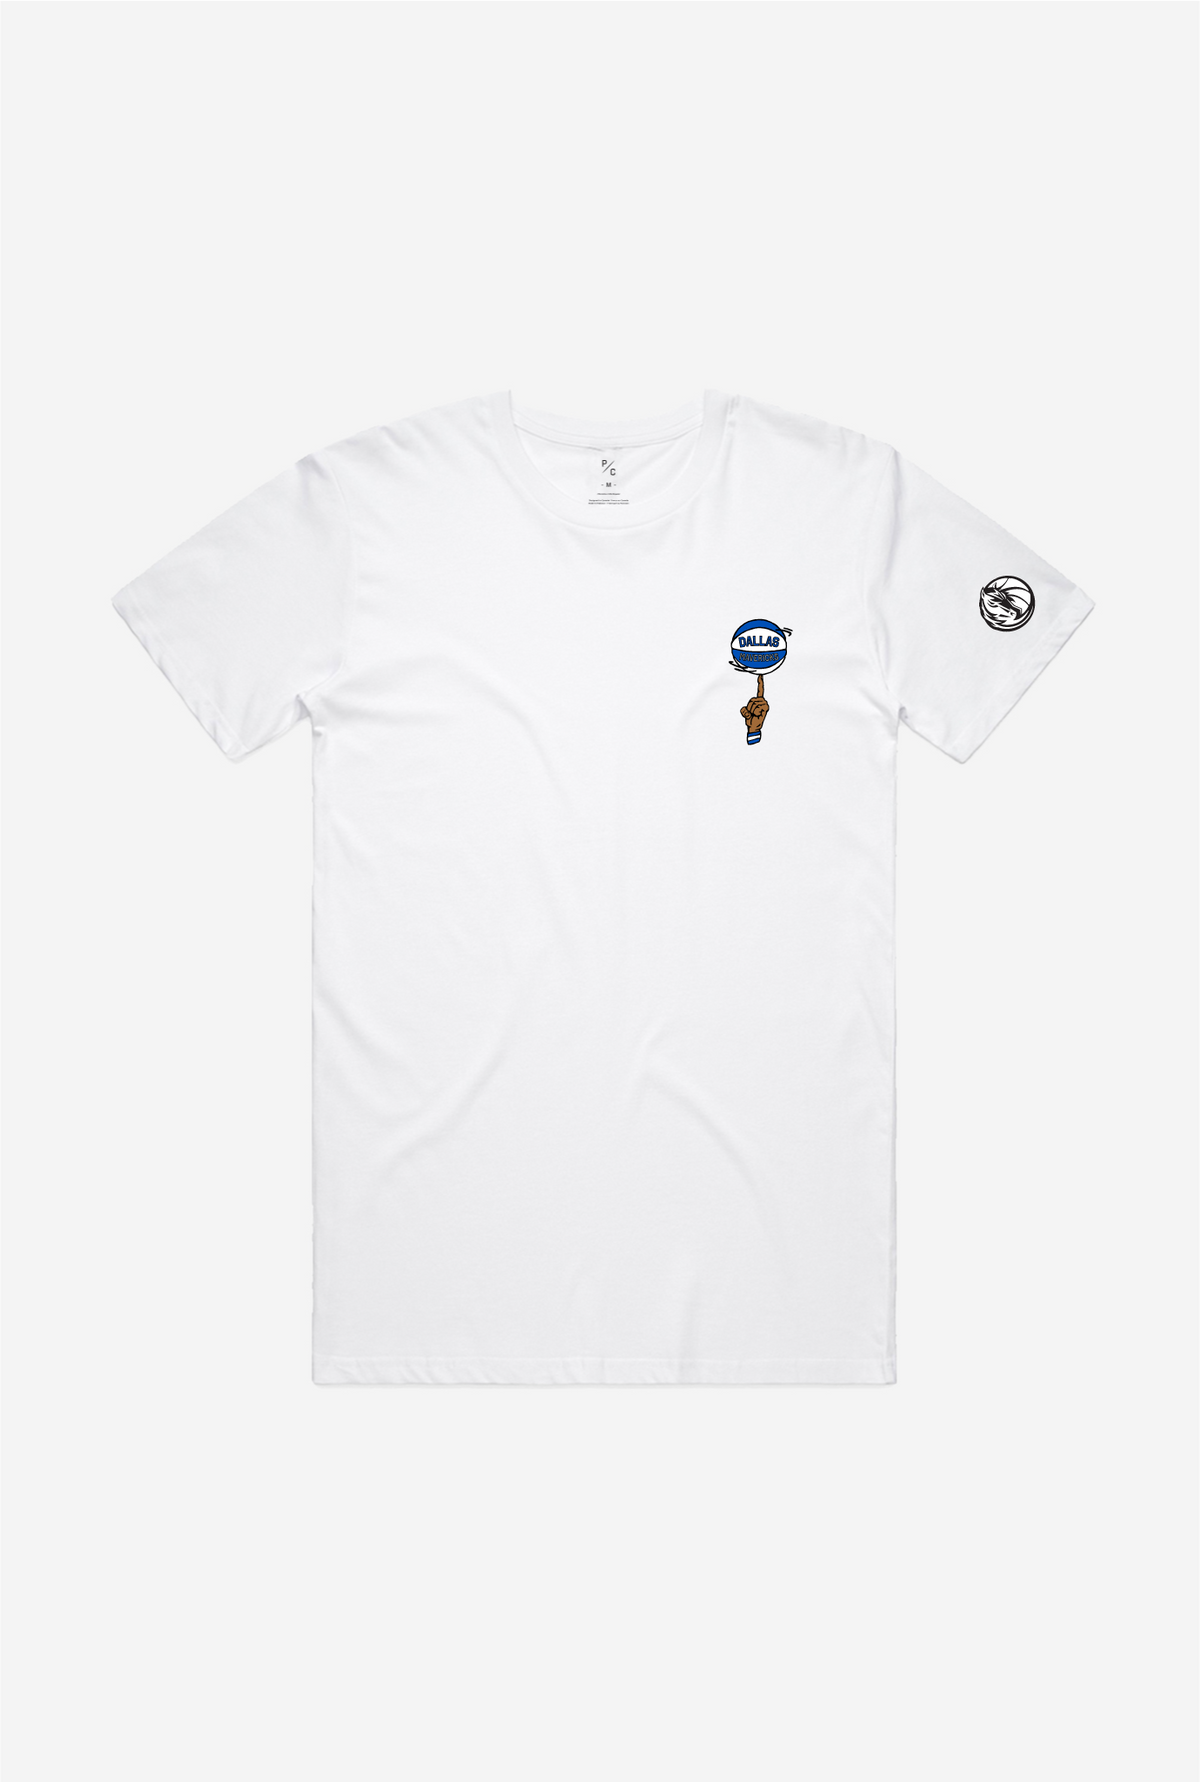 Dallas Mavericks Spinning Ball T-Shirt - White